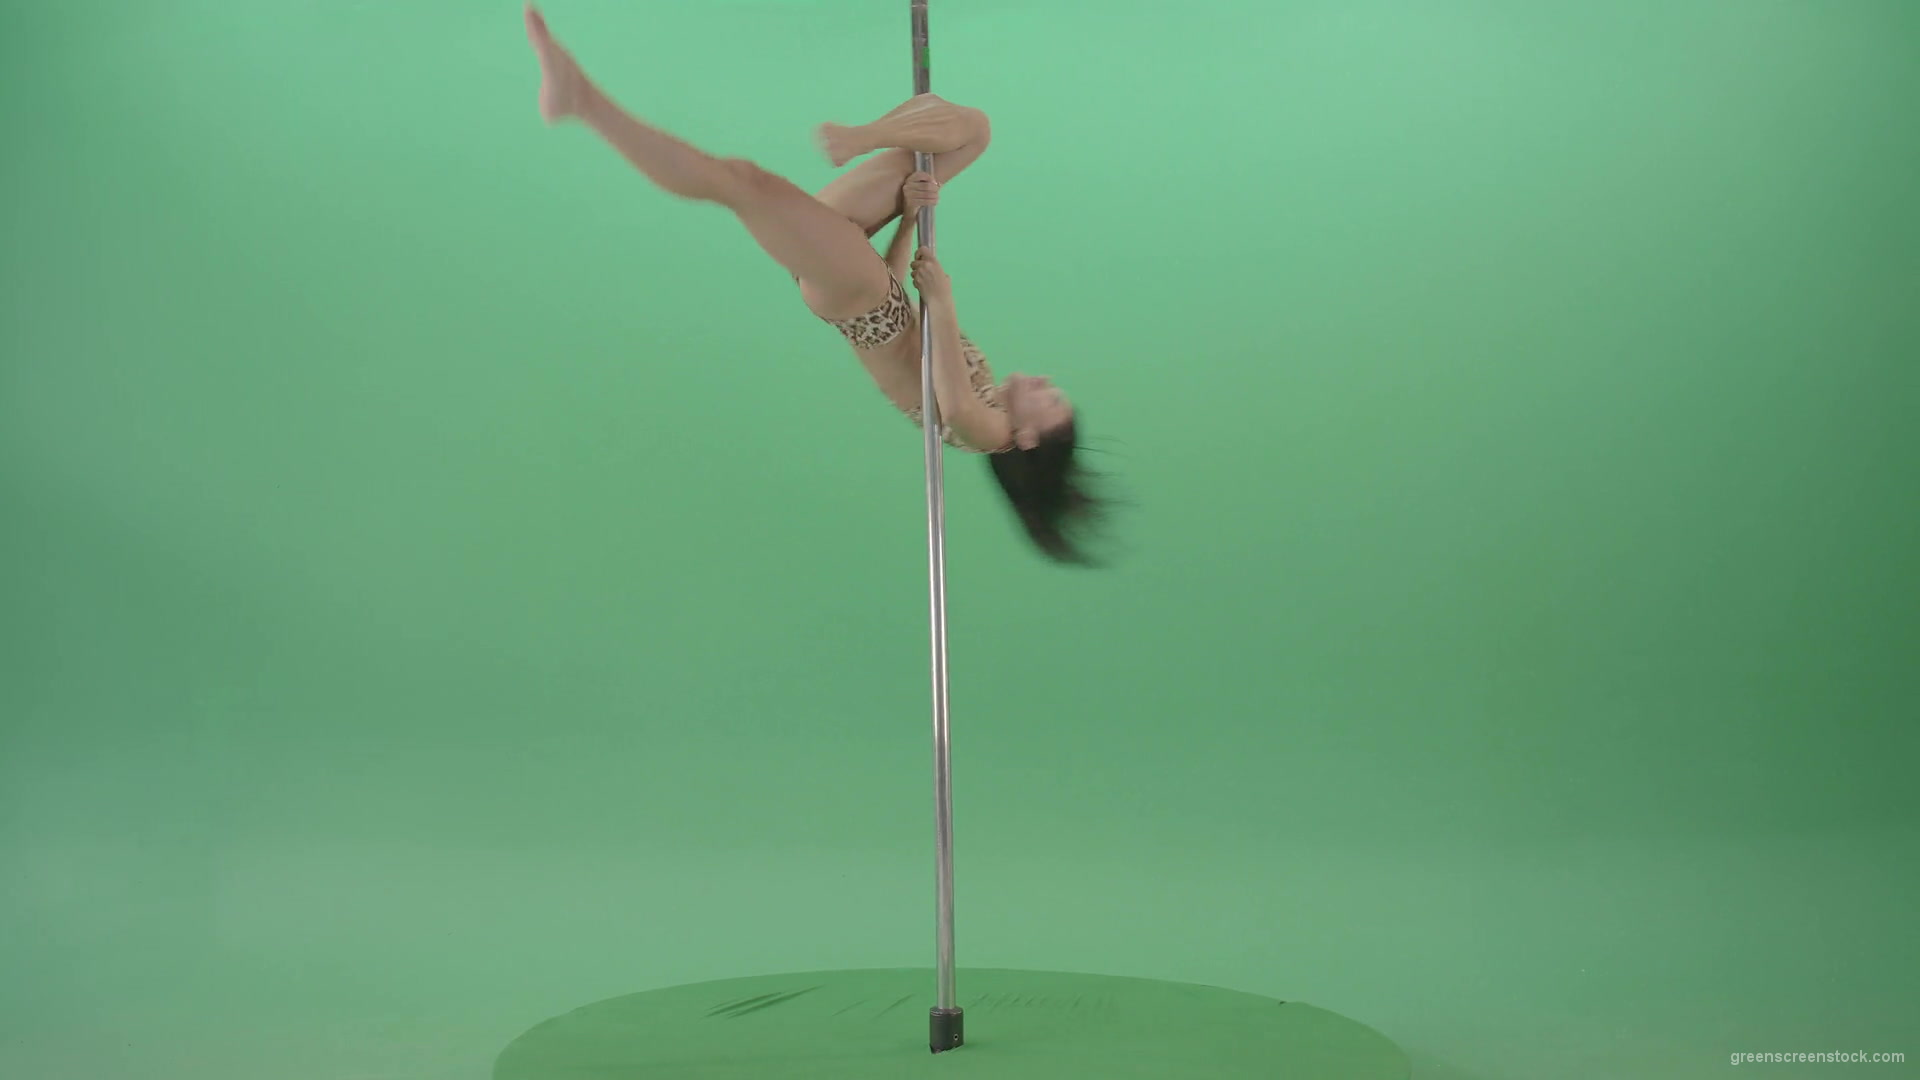 Athletic-sexy-female-model-spinning-on-pilon-in-jaguar-skin-underwear-dancing-pole-dance-on-Green-Screen-4K-Video-Footage-1920_004 Green Screen Stock